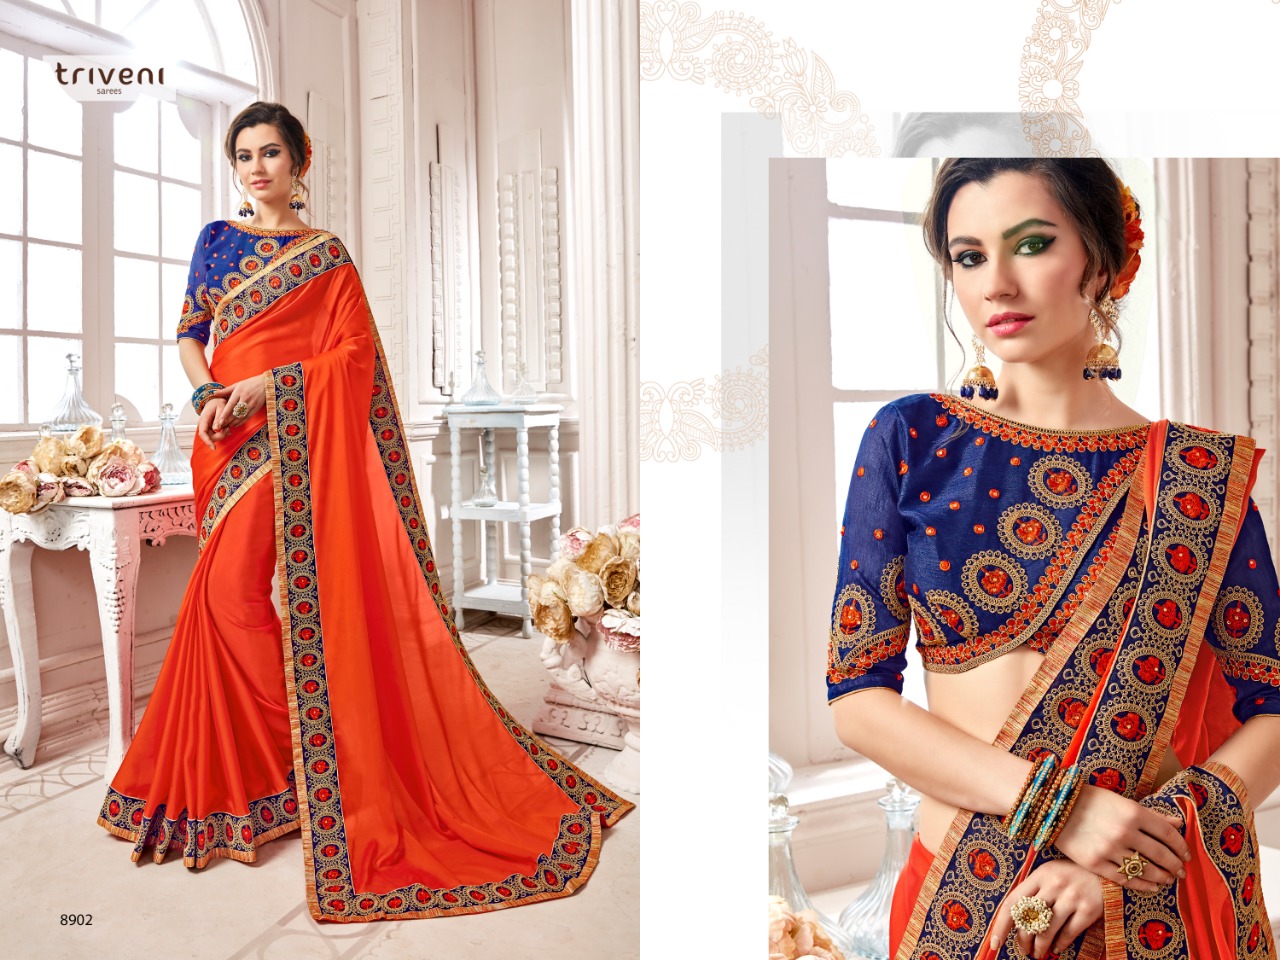 triveni dilruba colorful fancy collection of sarees